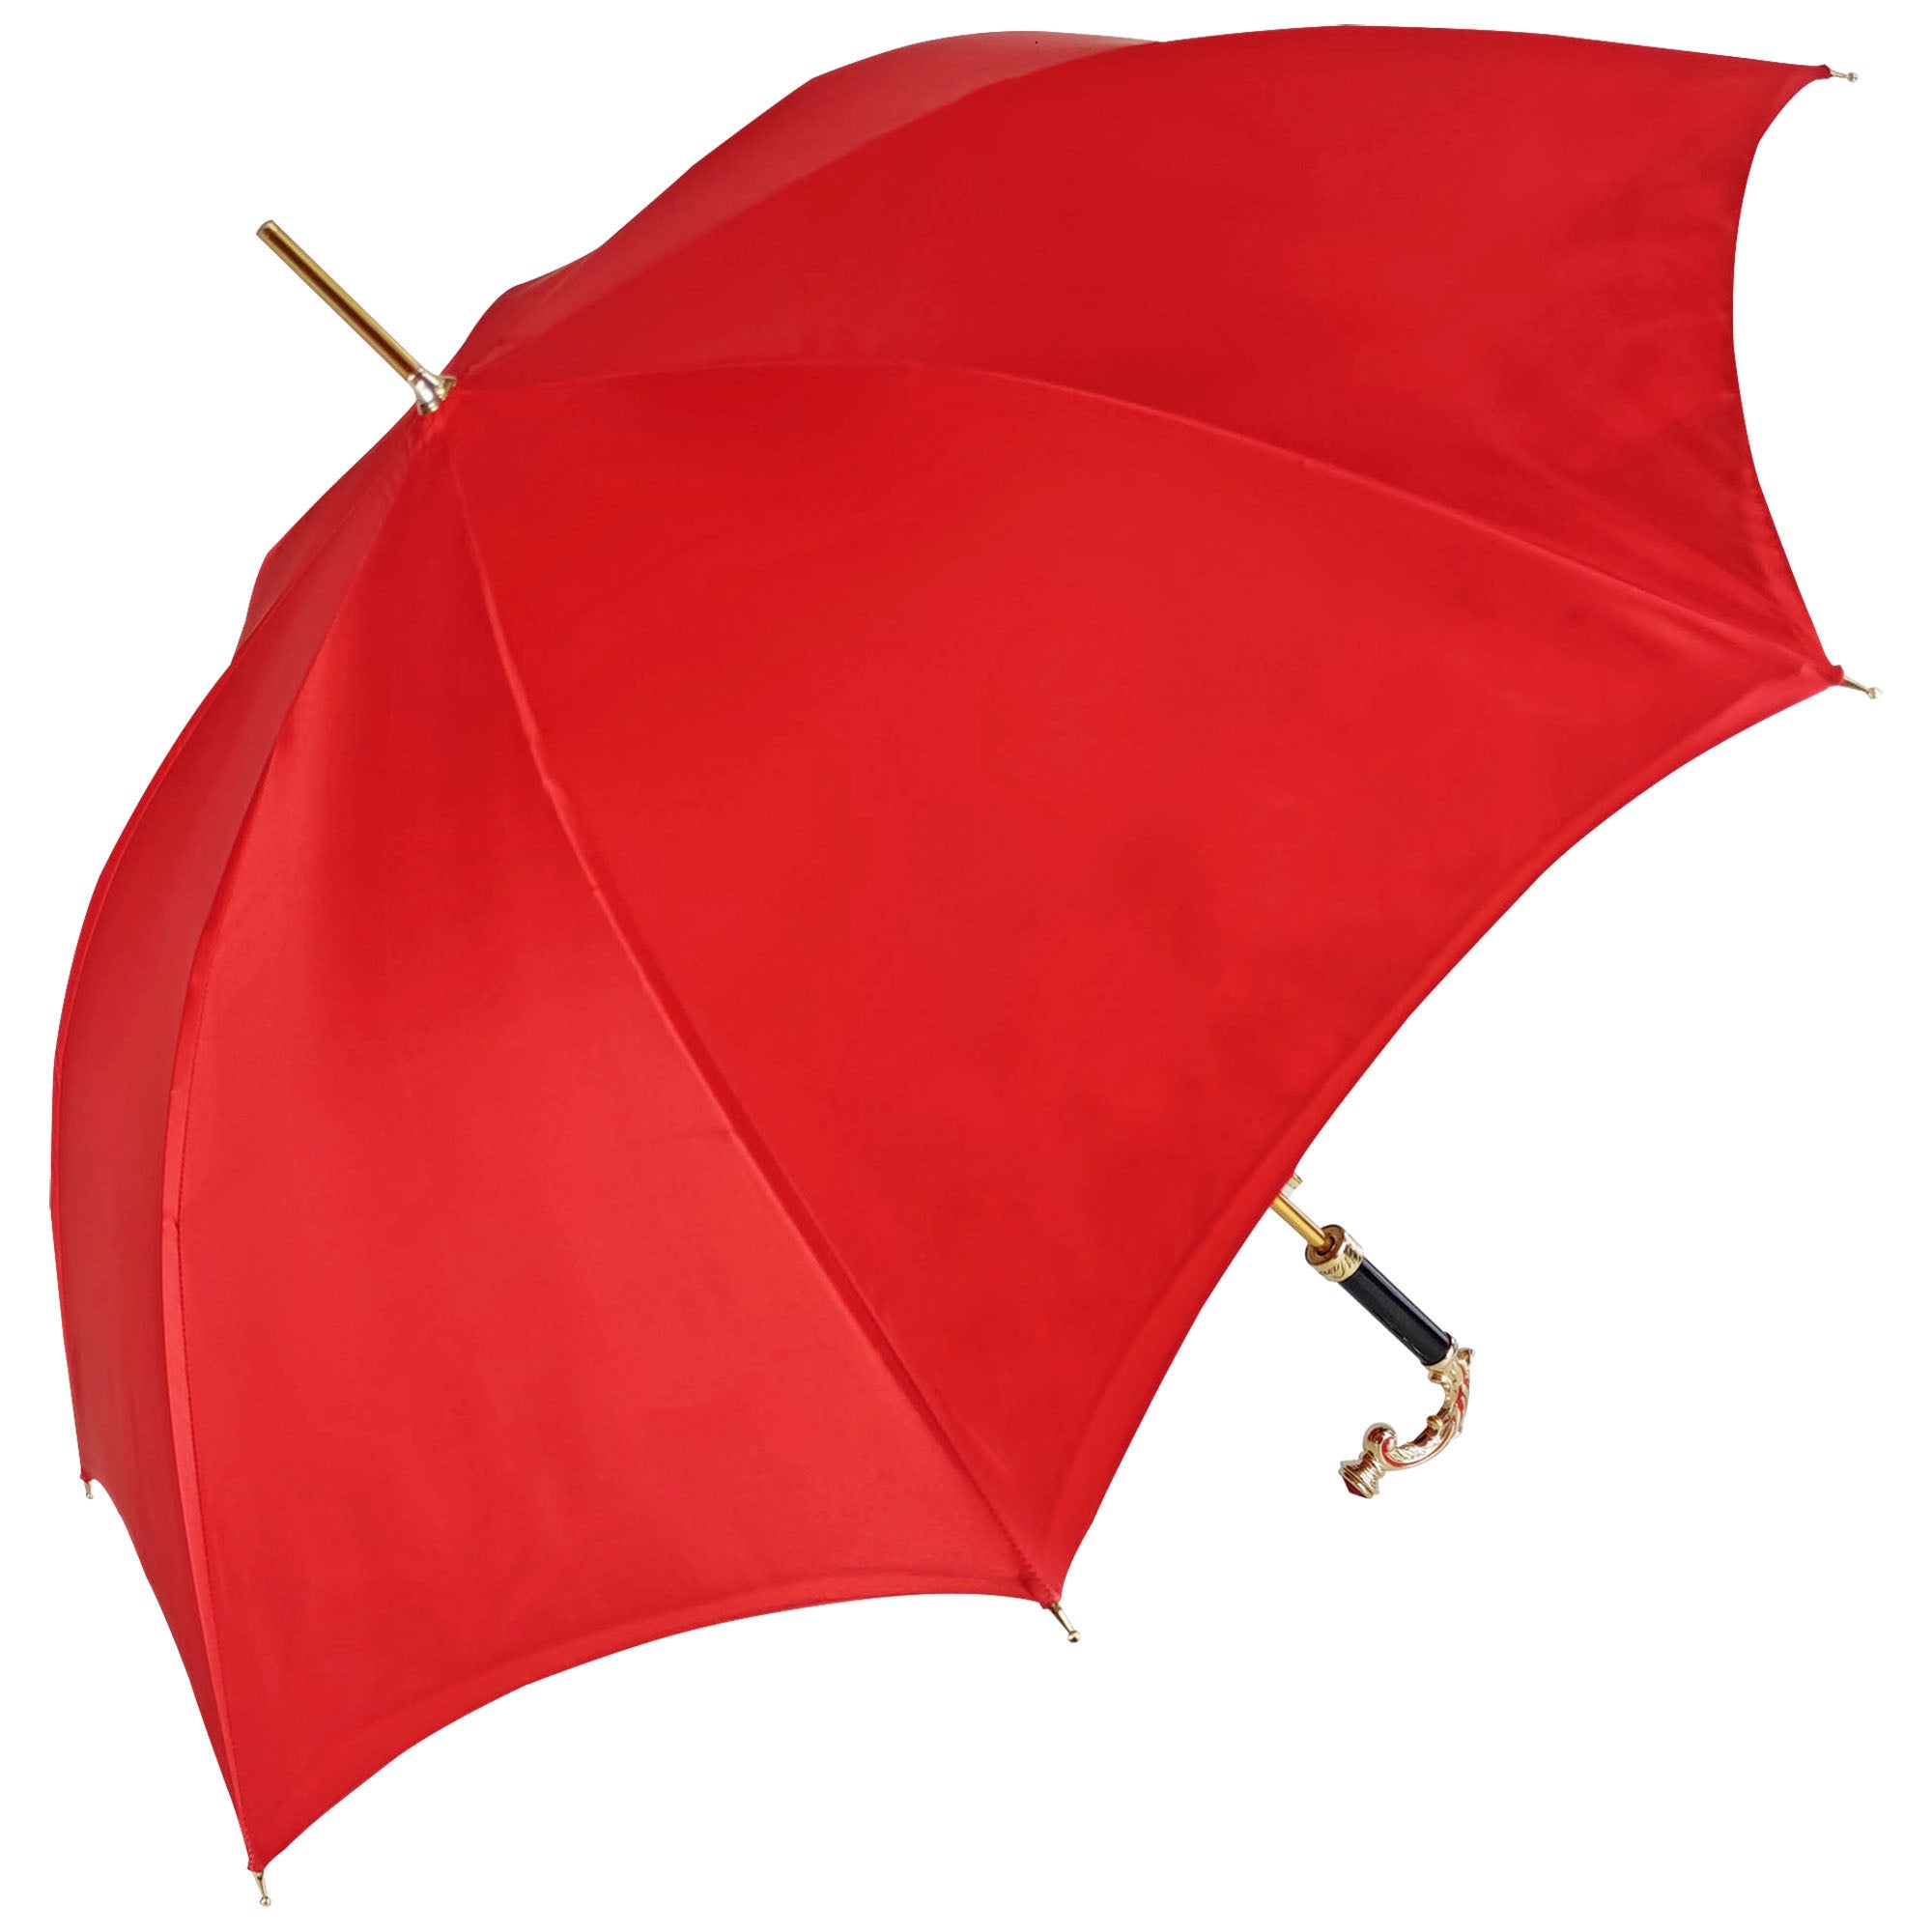 Bright red umbrella